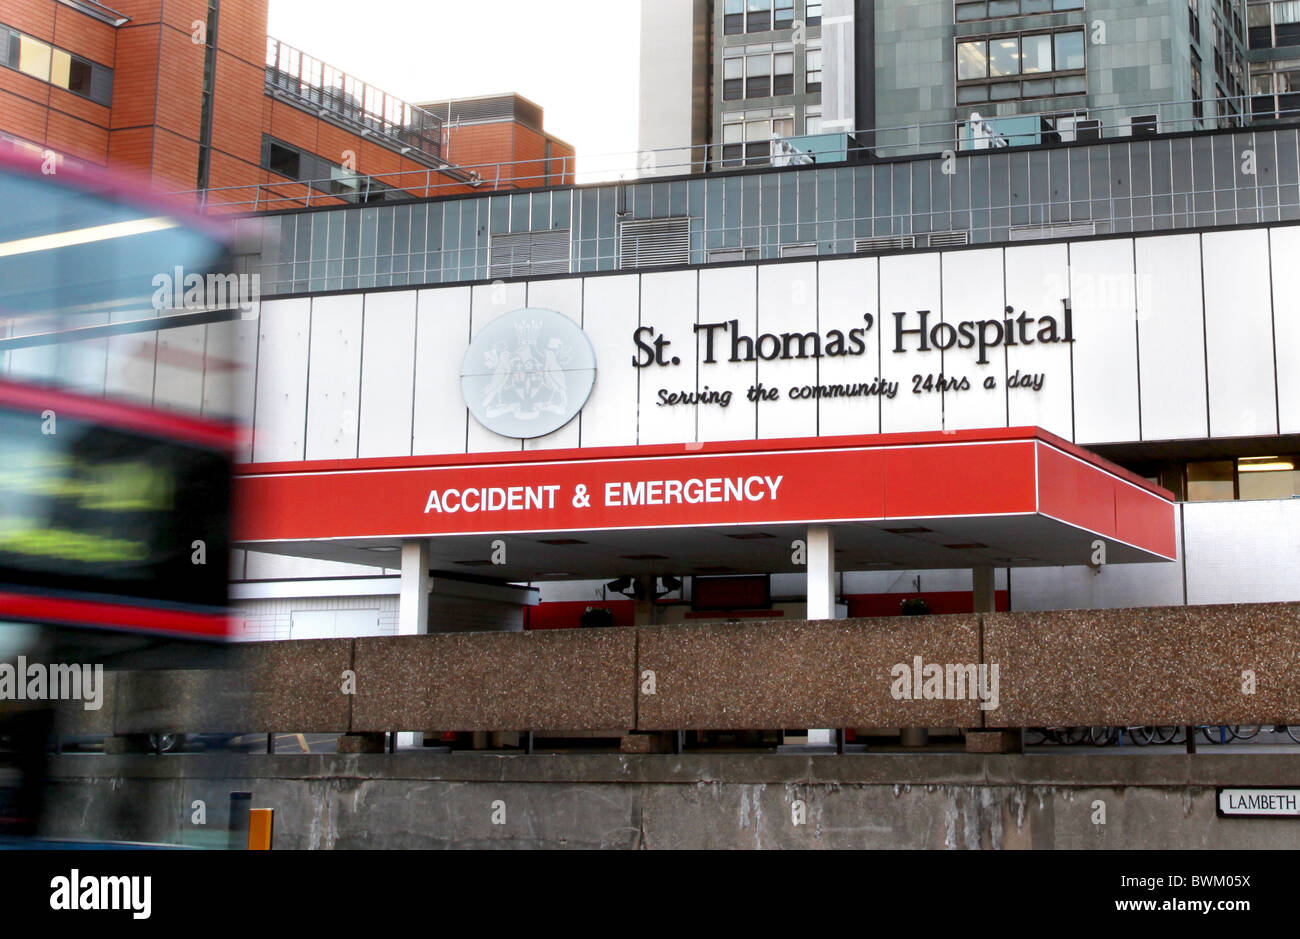 St Thomas' Hospital, Londres Banque D'Images